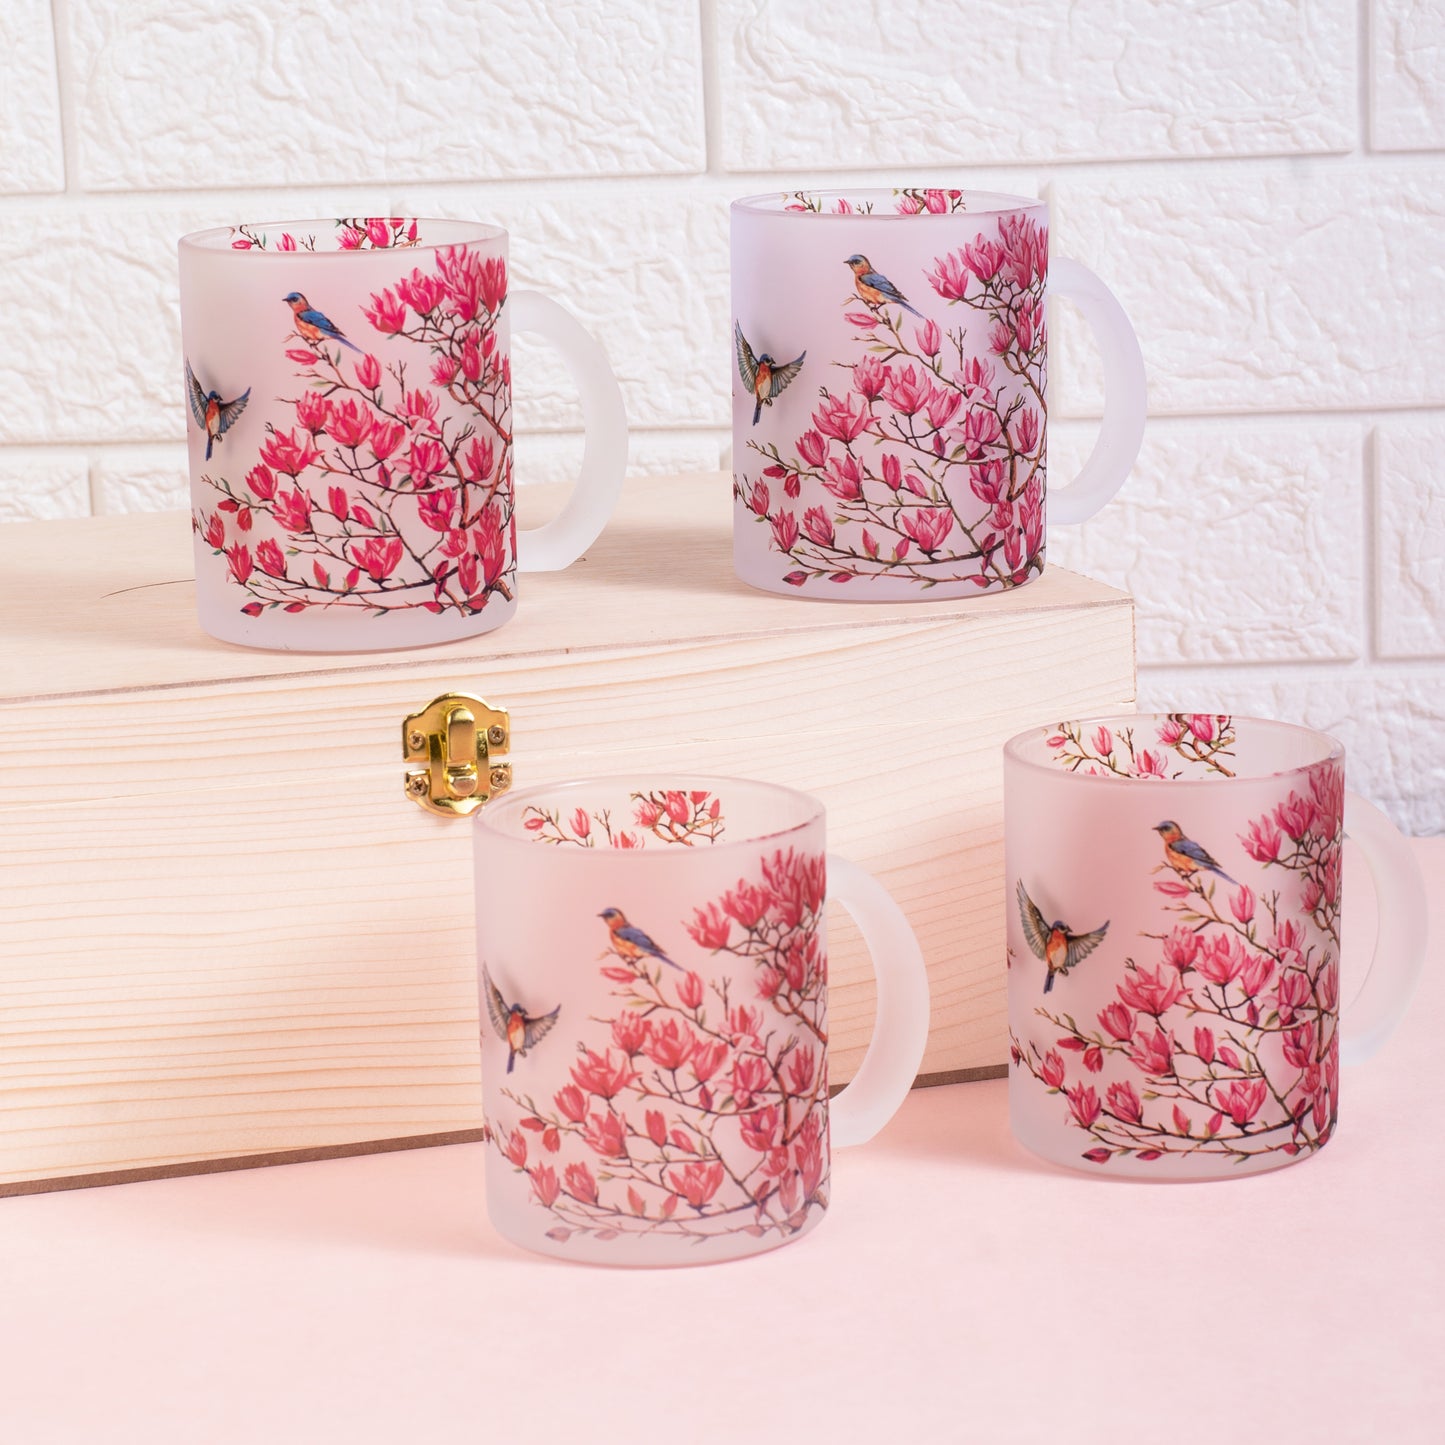 Pink Magnolias Frosted Glass Mug - Gift Set